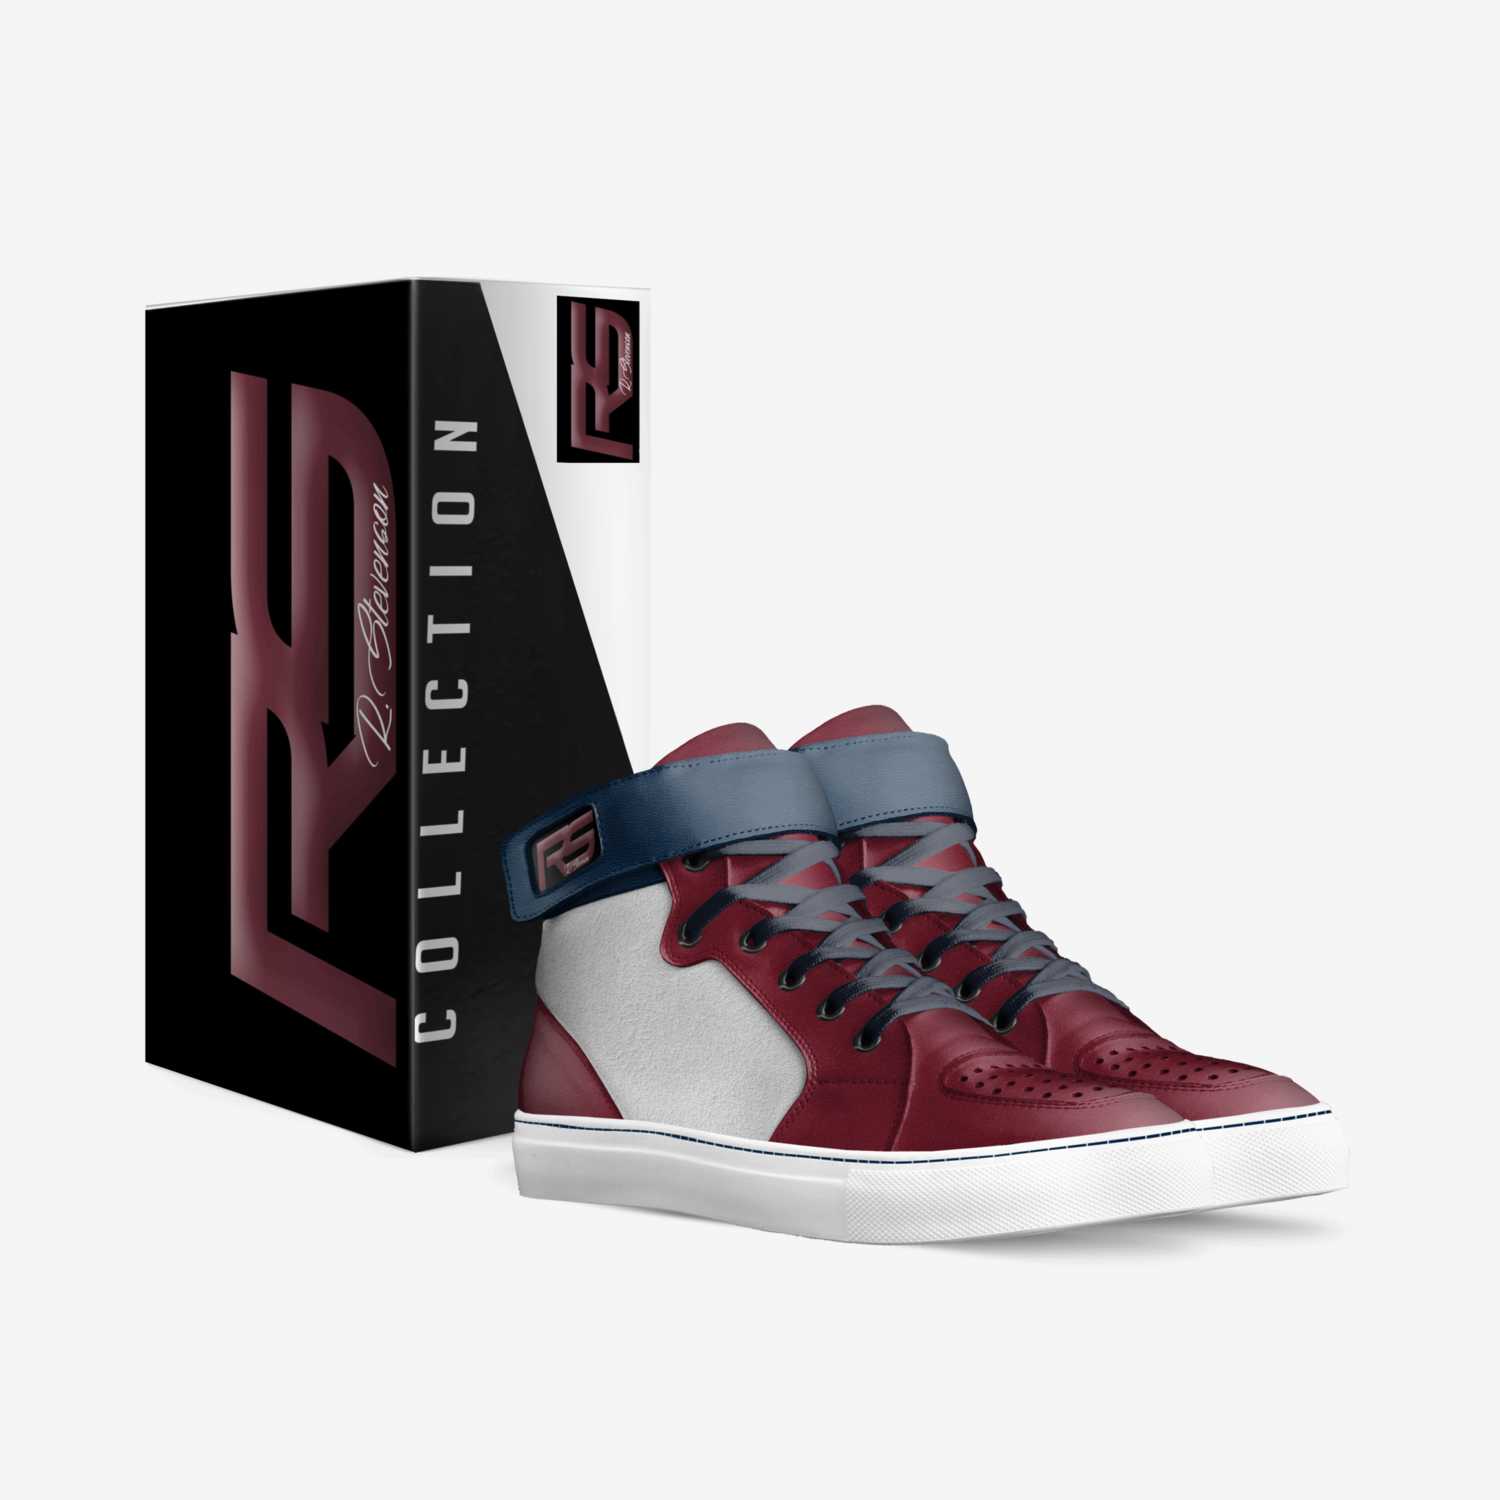 R. Stevenson custom made in Italy shoes by Barrick Stevenson | Box view